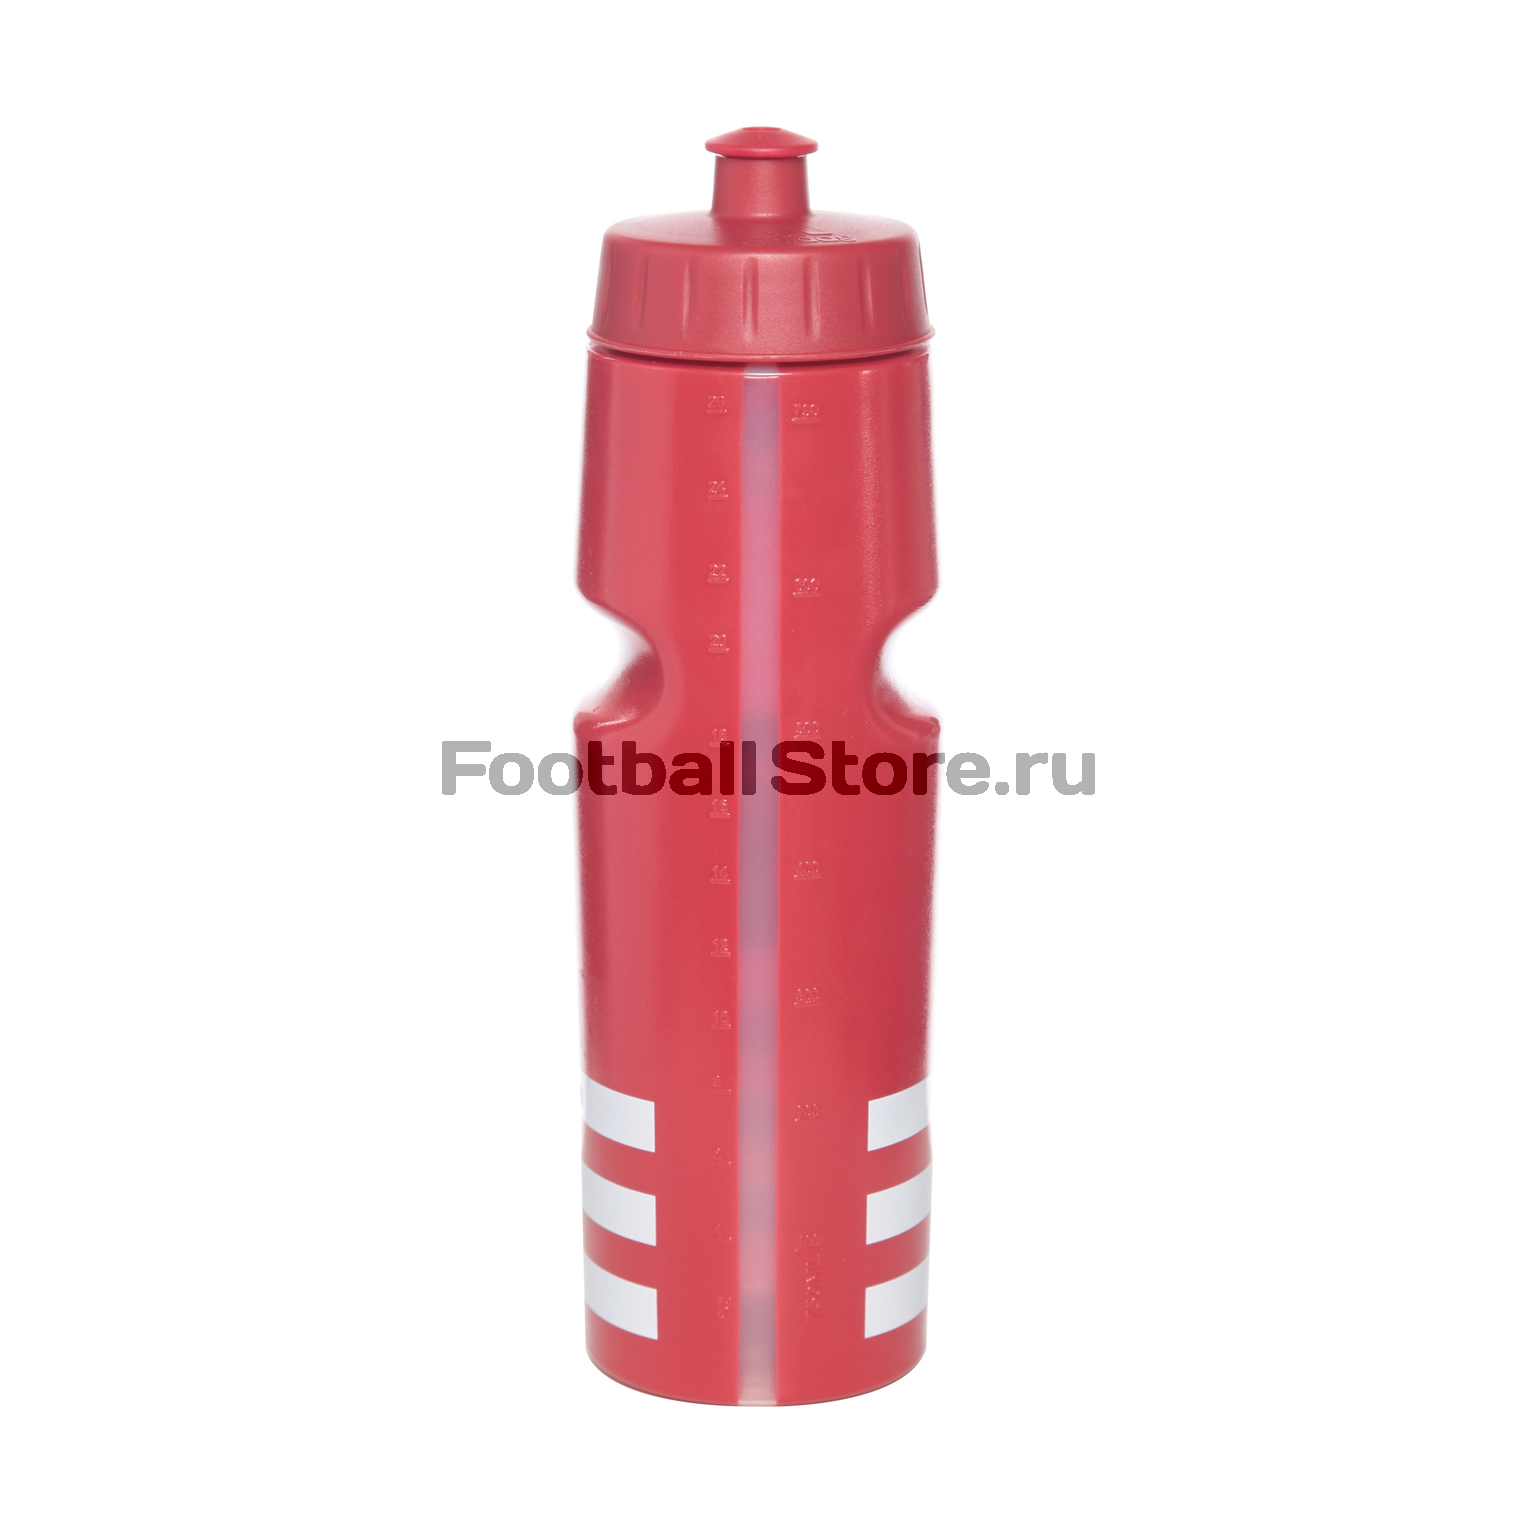 Бутылка для воды Adidas Manchester United  BR7016